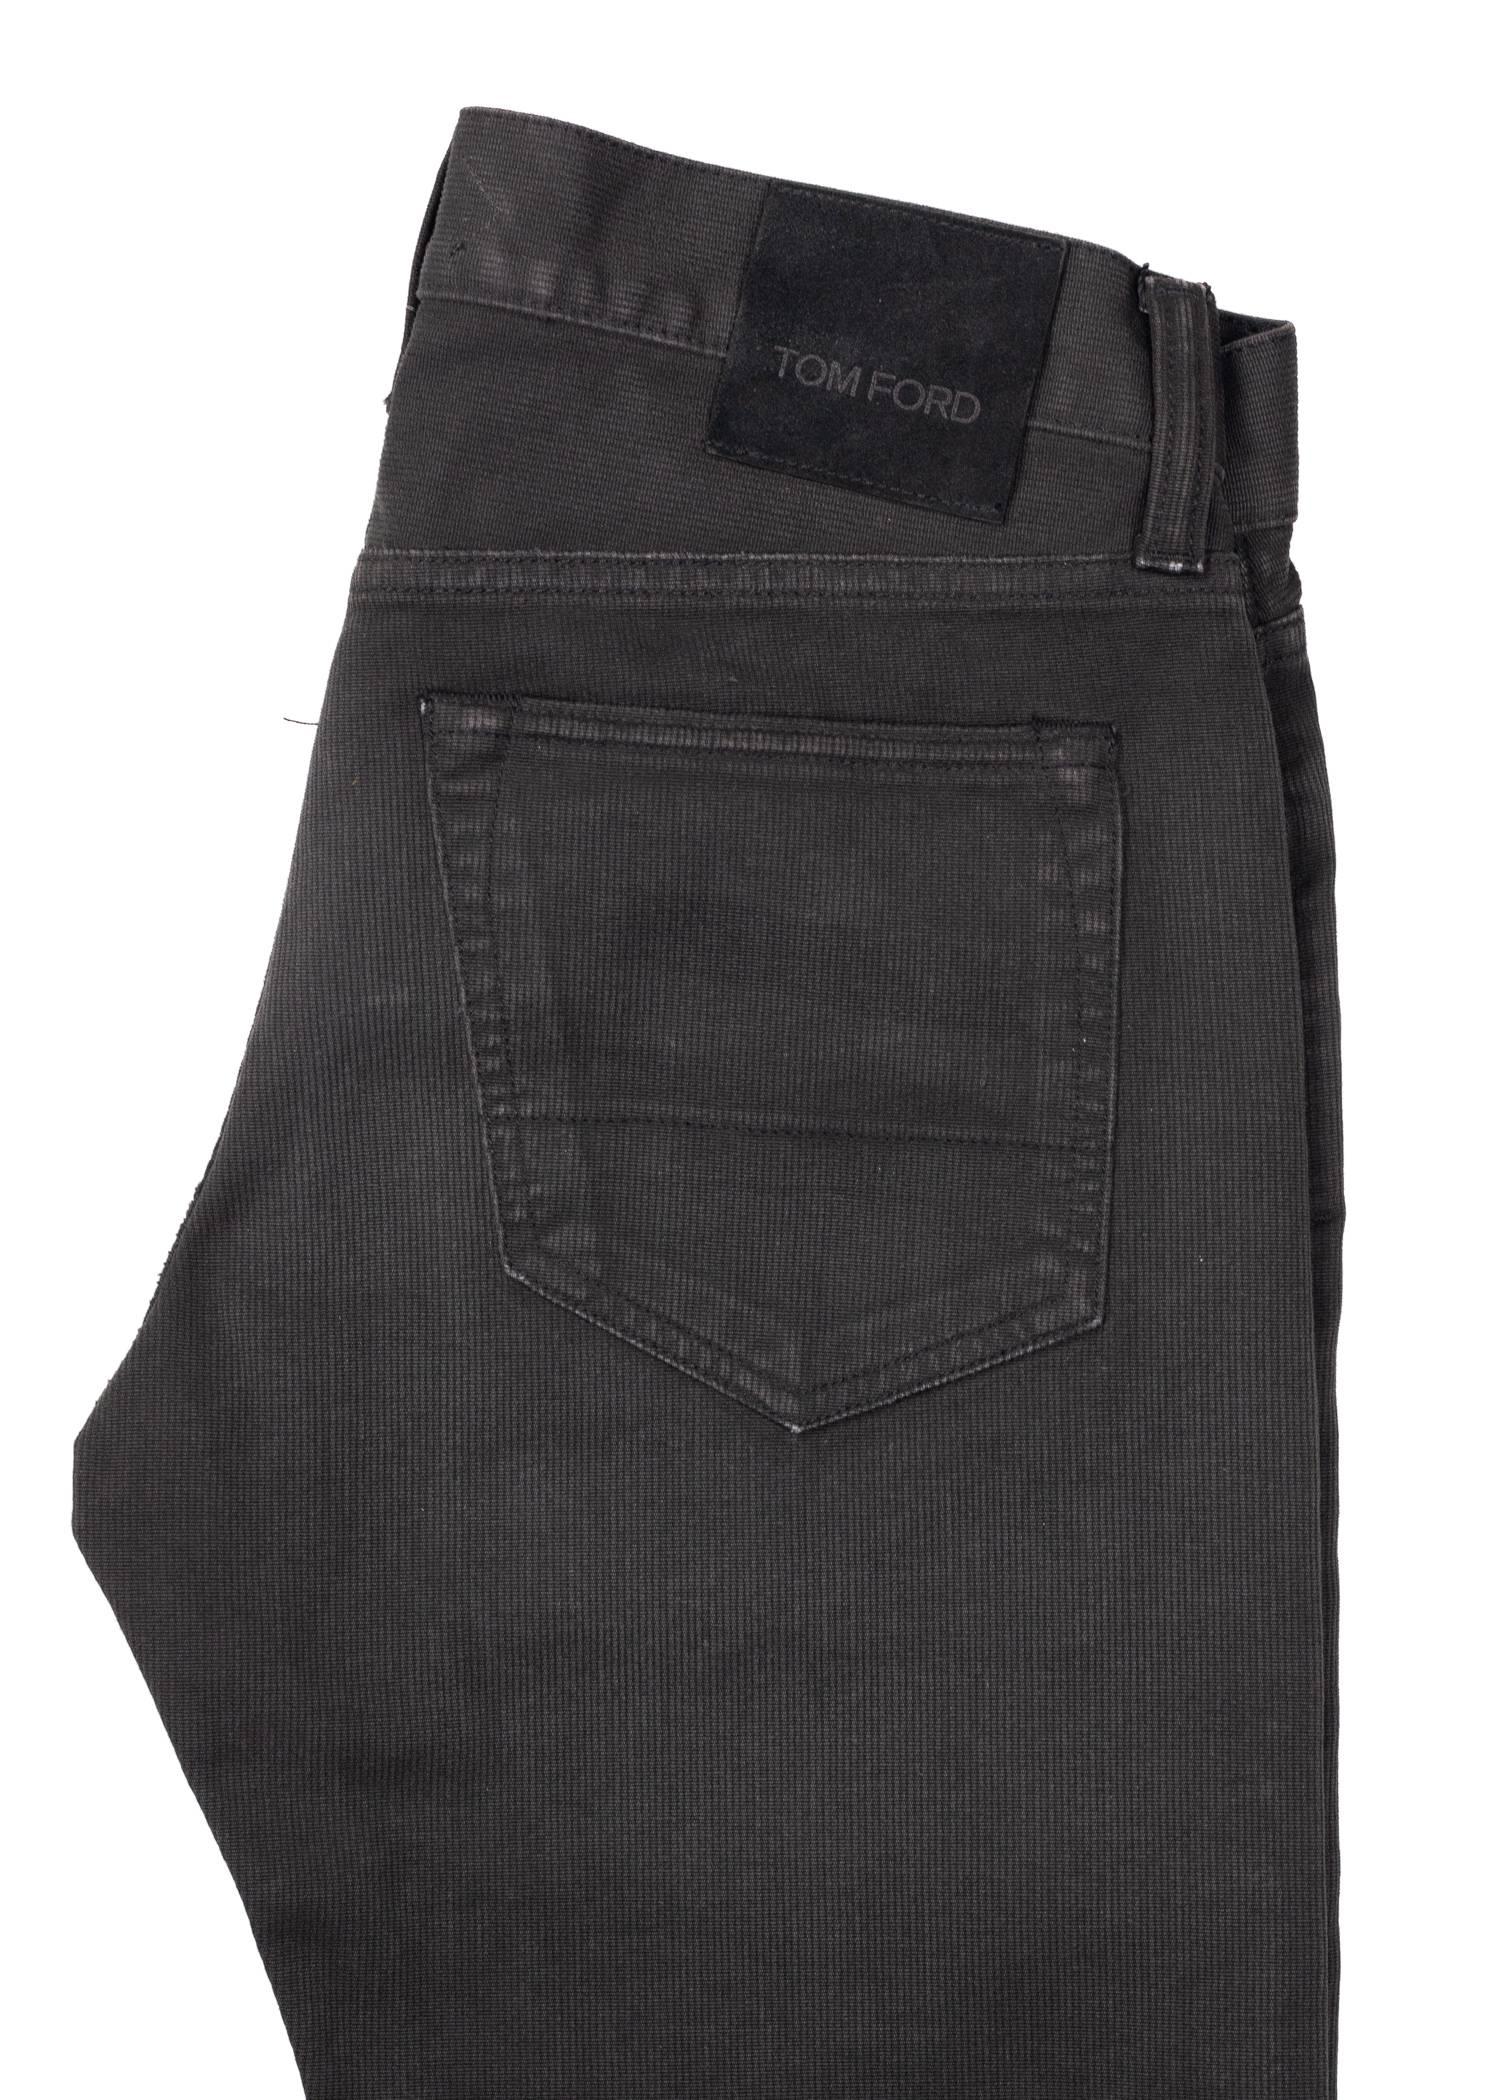 Black om Ford Denim Jeans Dark Grey Wash Size 28 Straight Fit Model For Sale